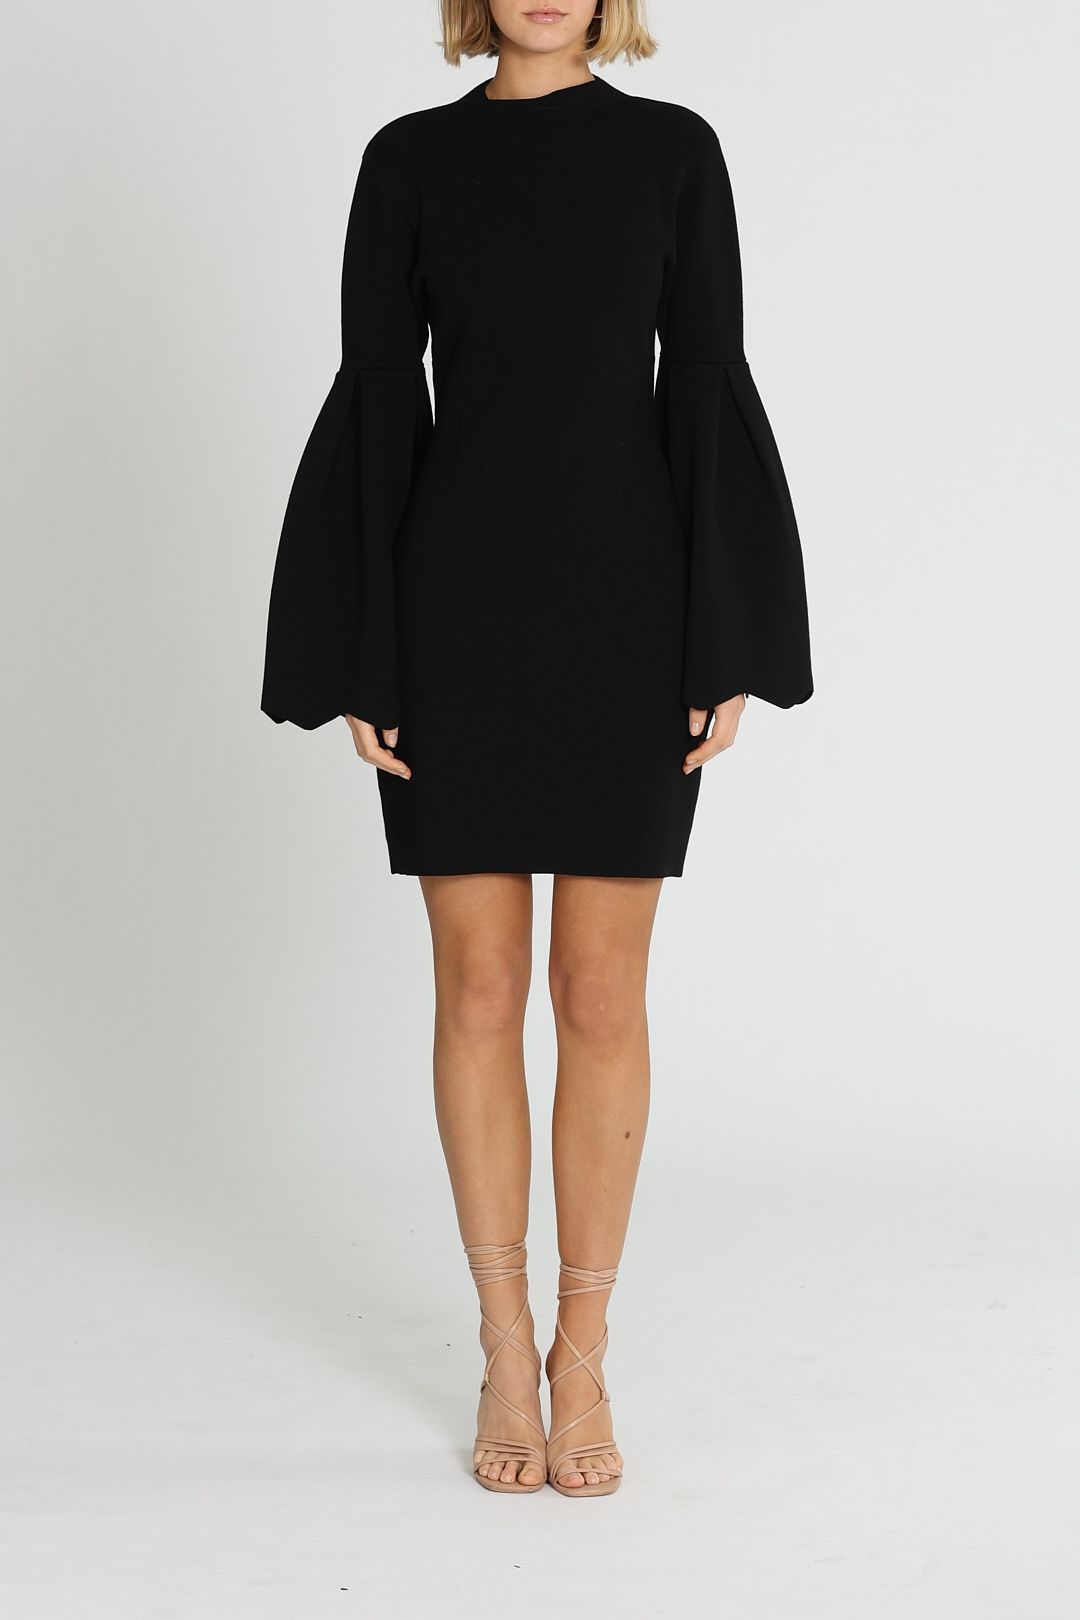 Clea Ebony Knit Dress Black